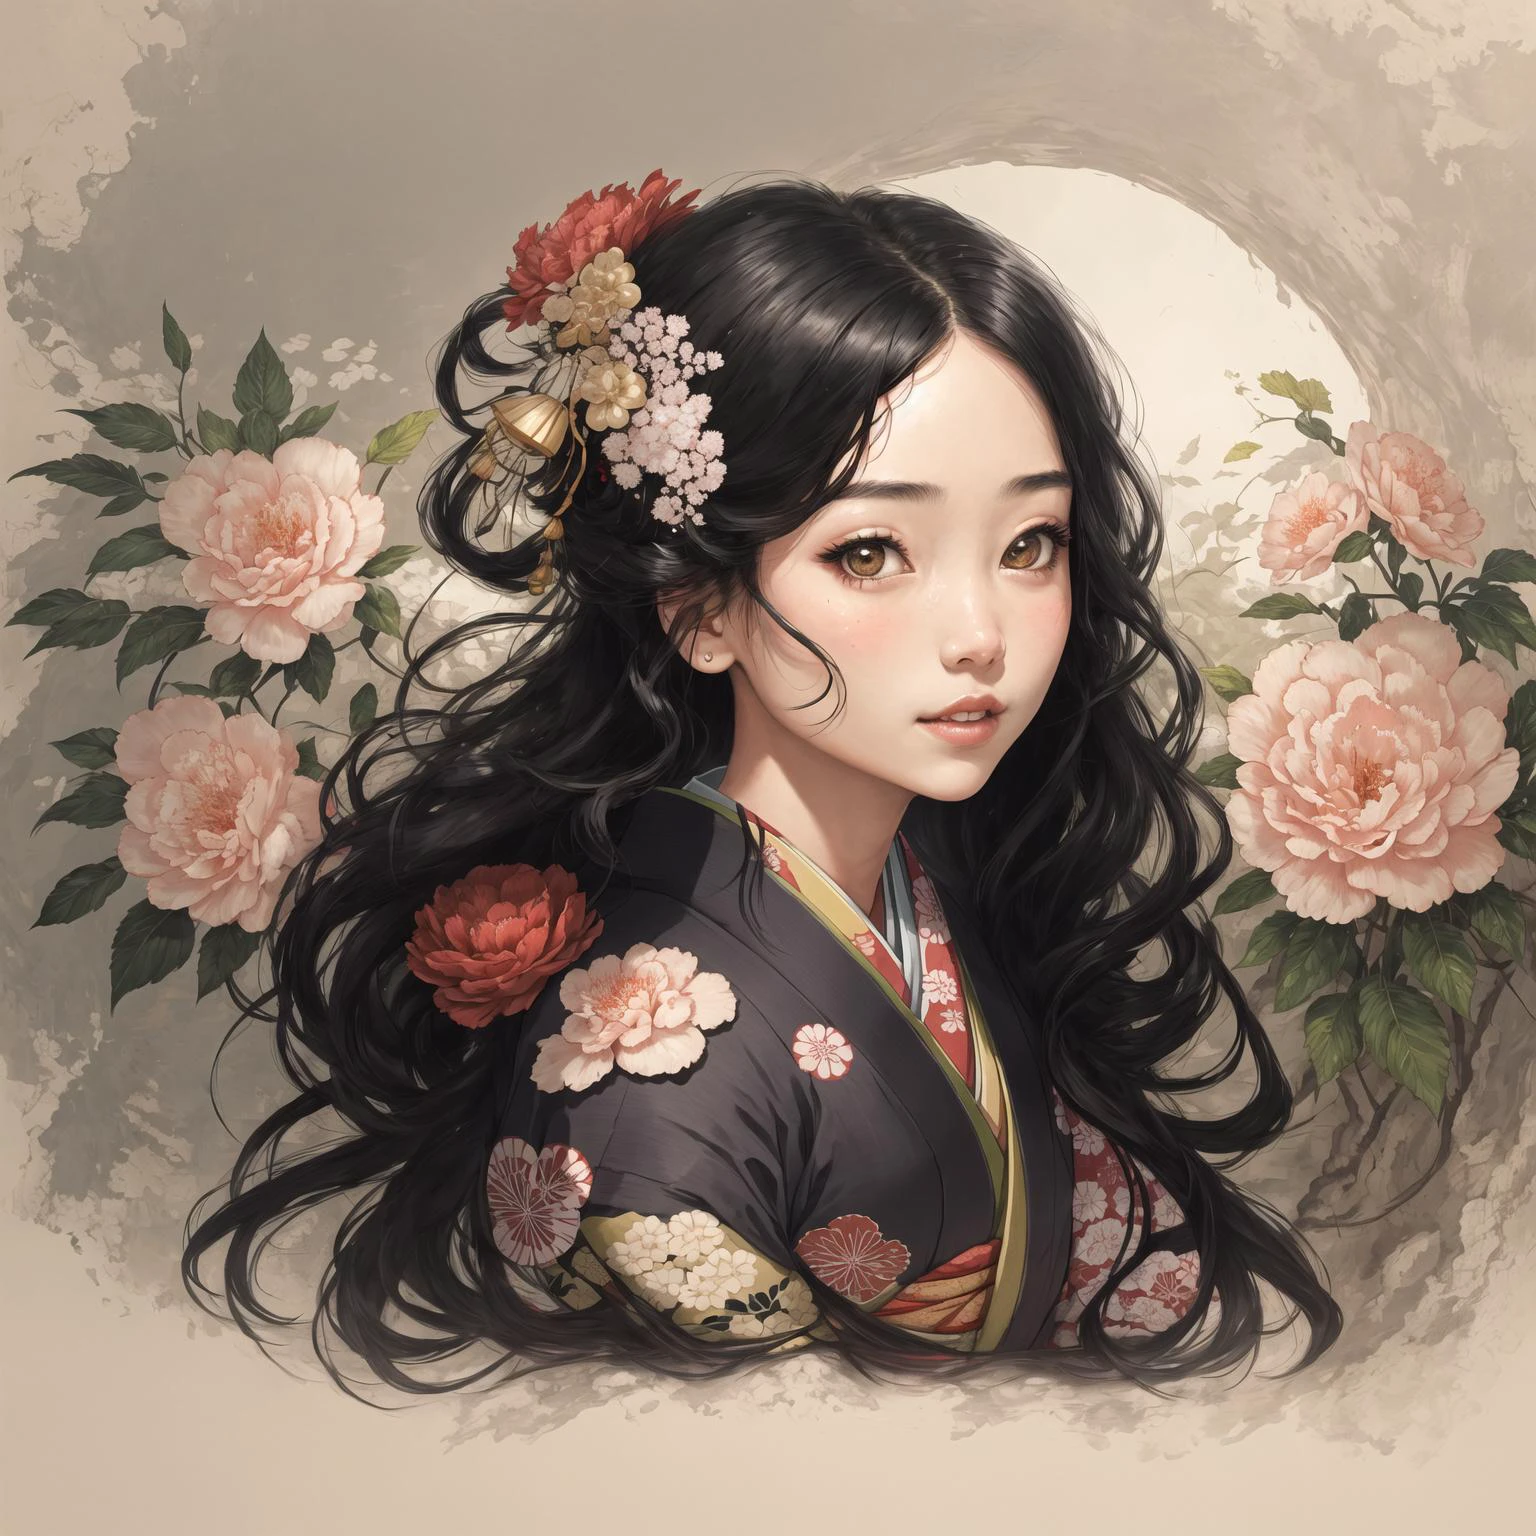 Obra maestra,mejor calidad,1 chica,Fantasía,paisaje,hermoso rostro,cara muy detallada,pelo negro,kimono